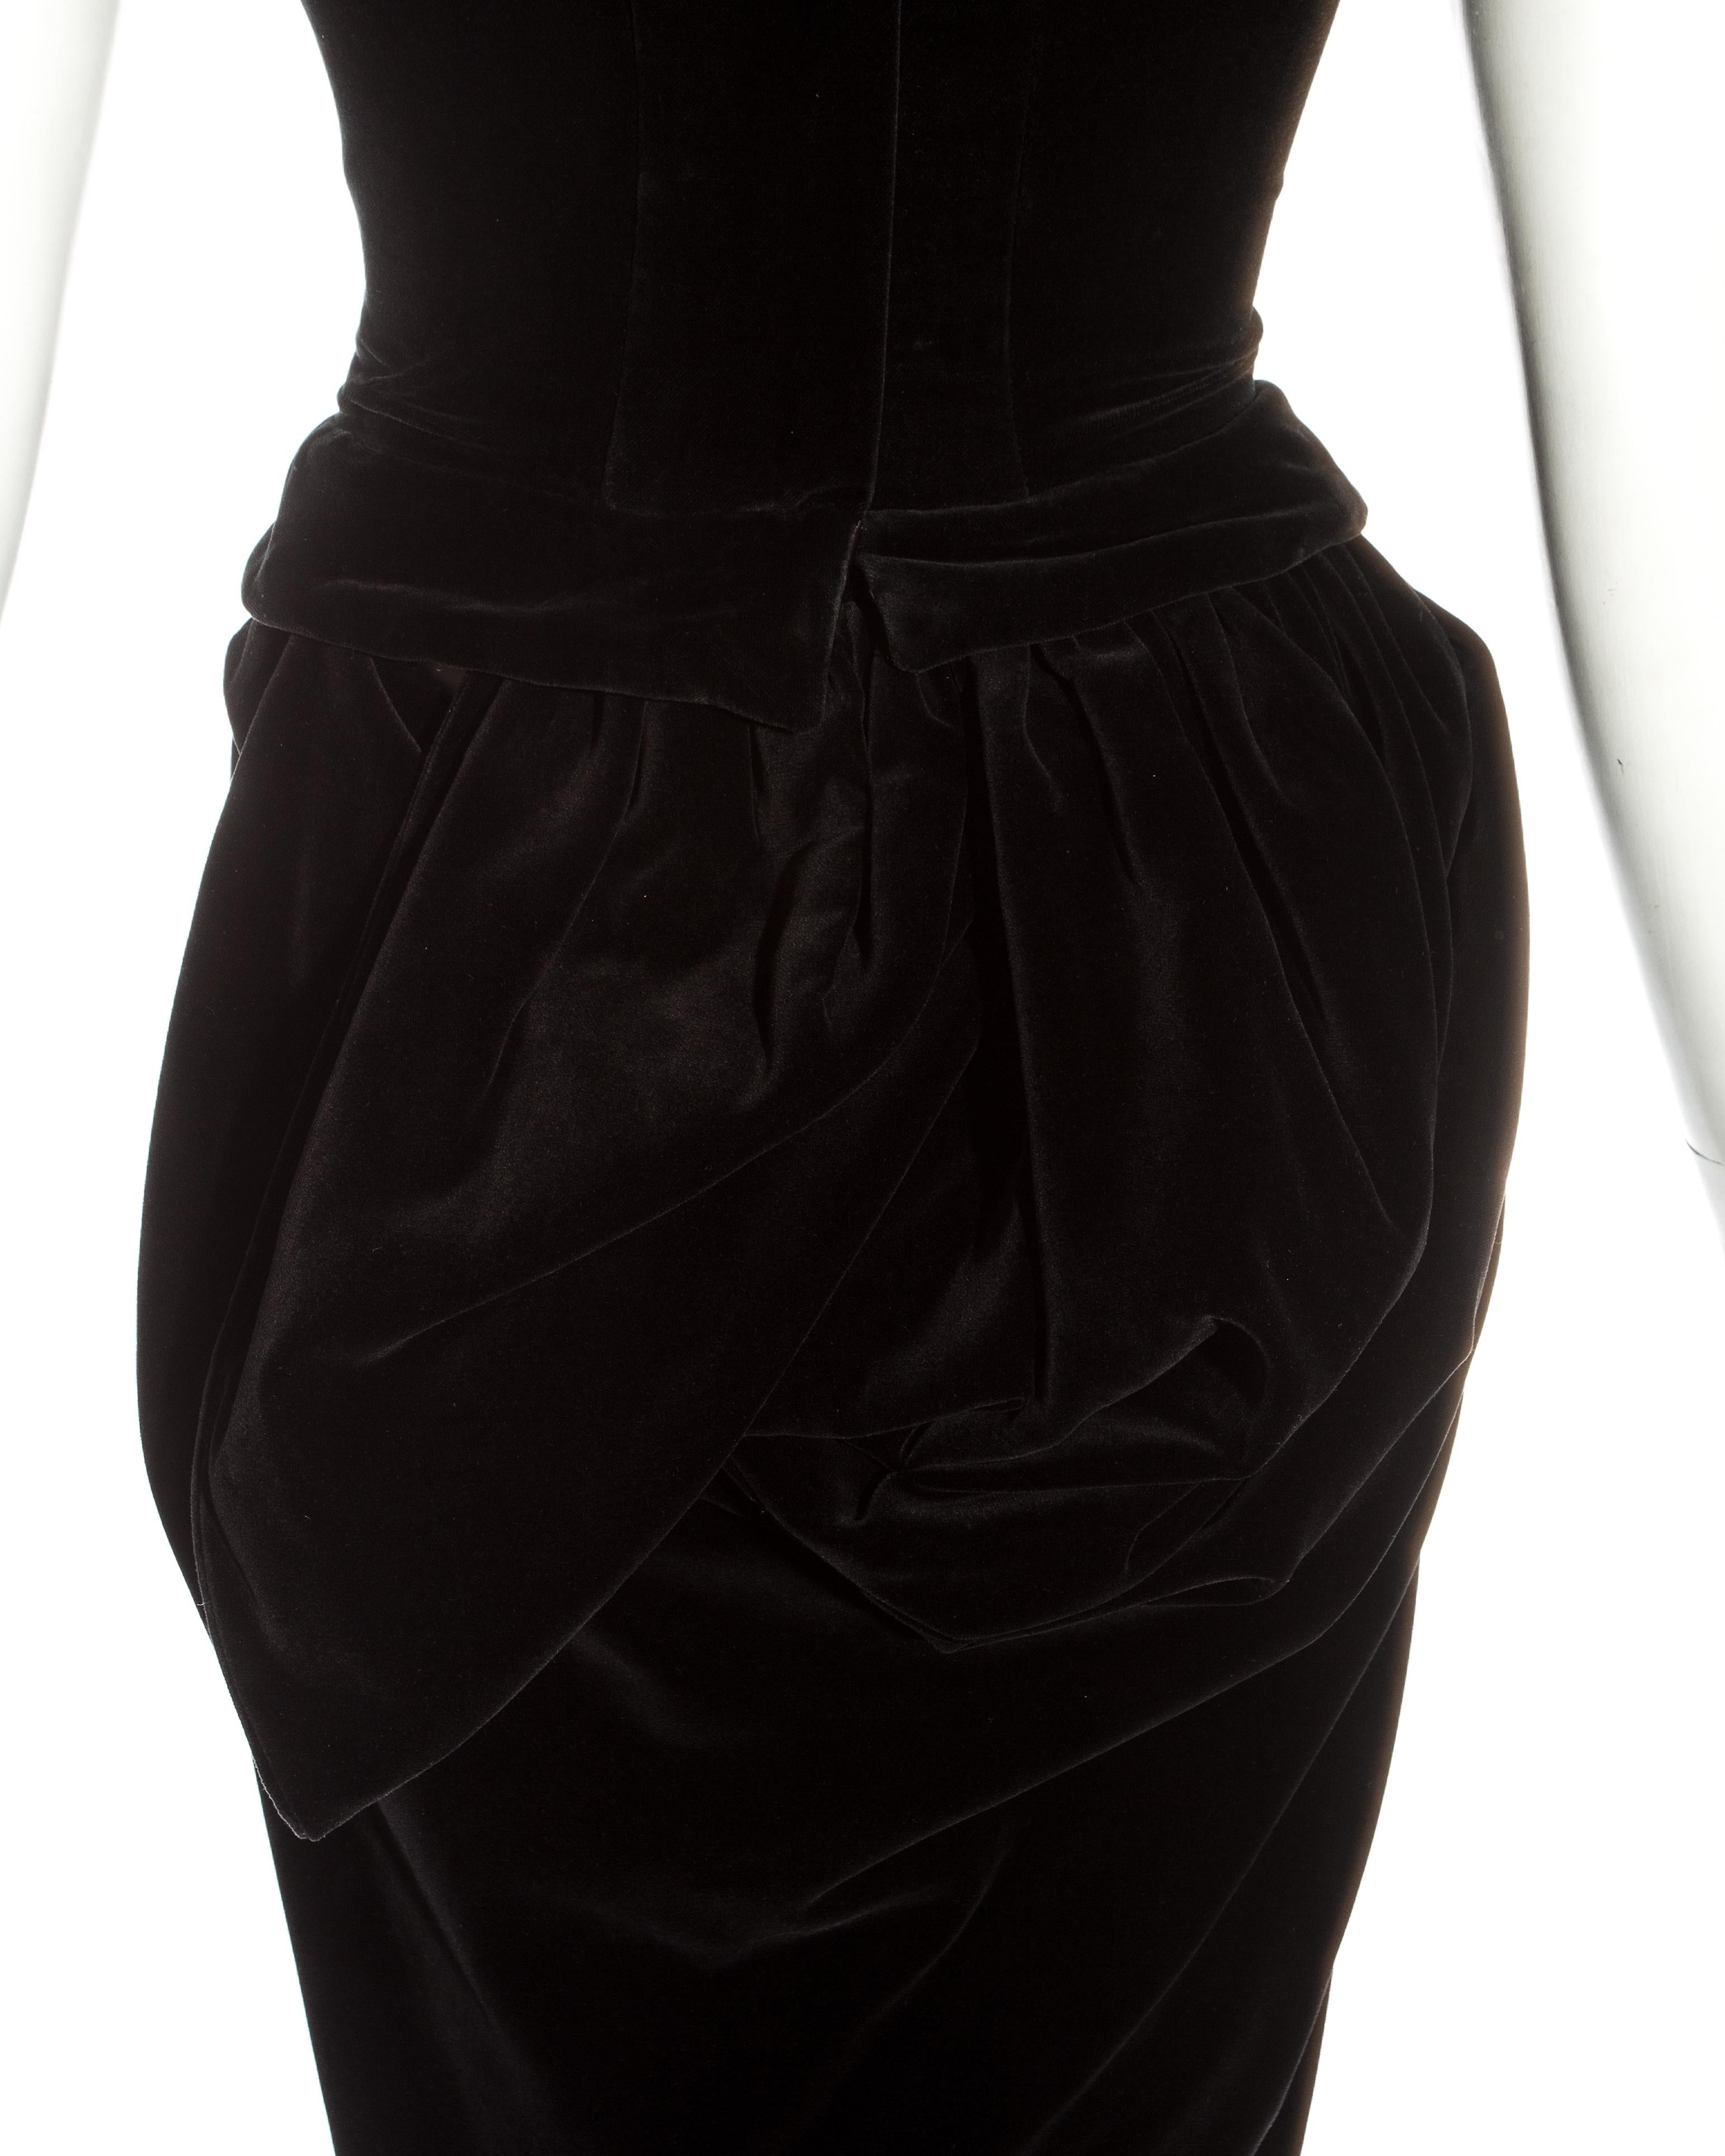 Black Vivienne Westwood black velvet corset and bustle skirt, fw 1996